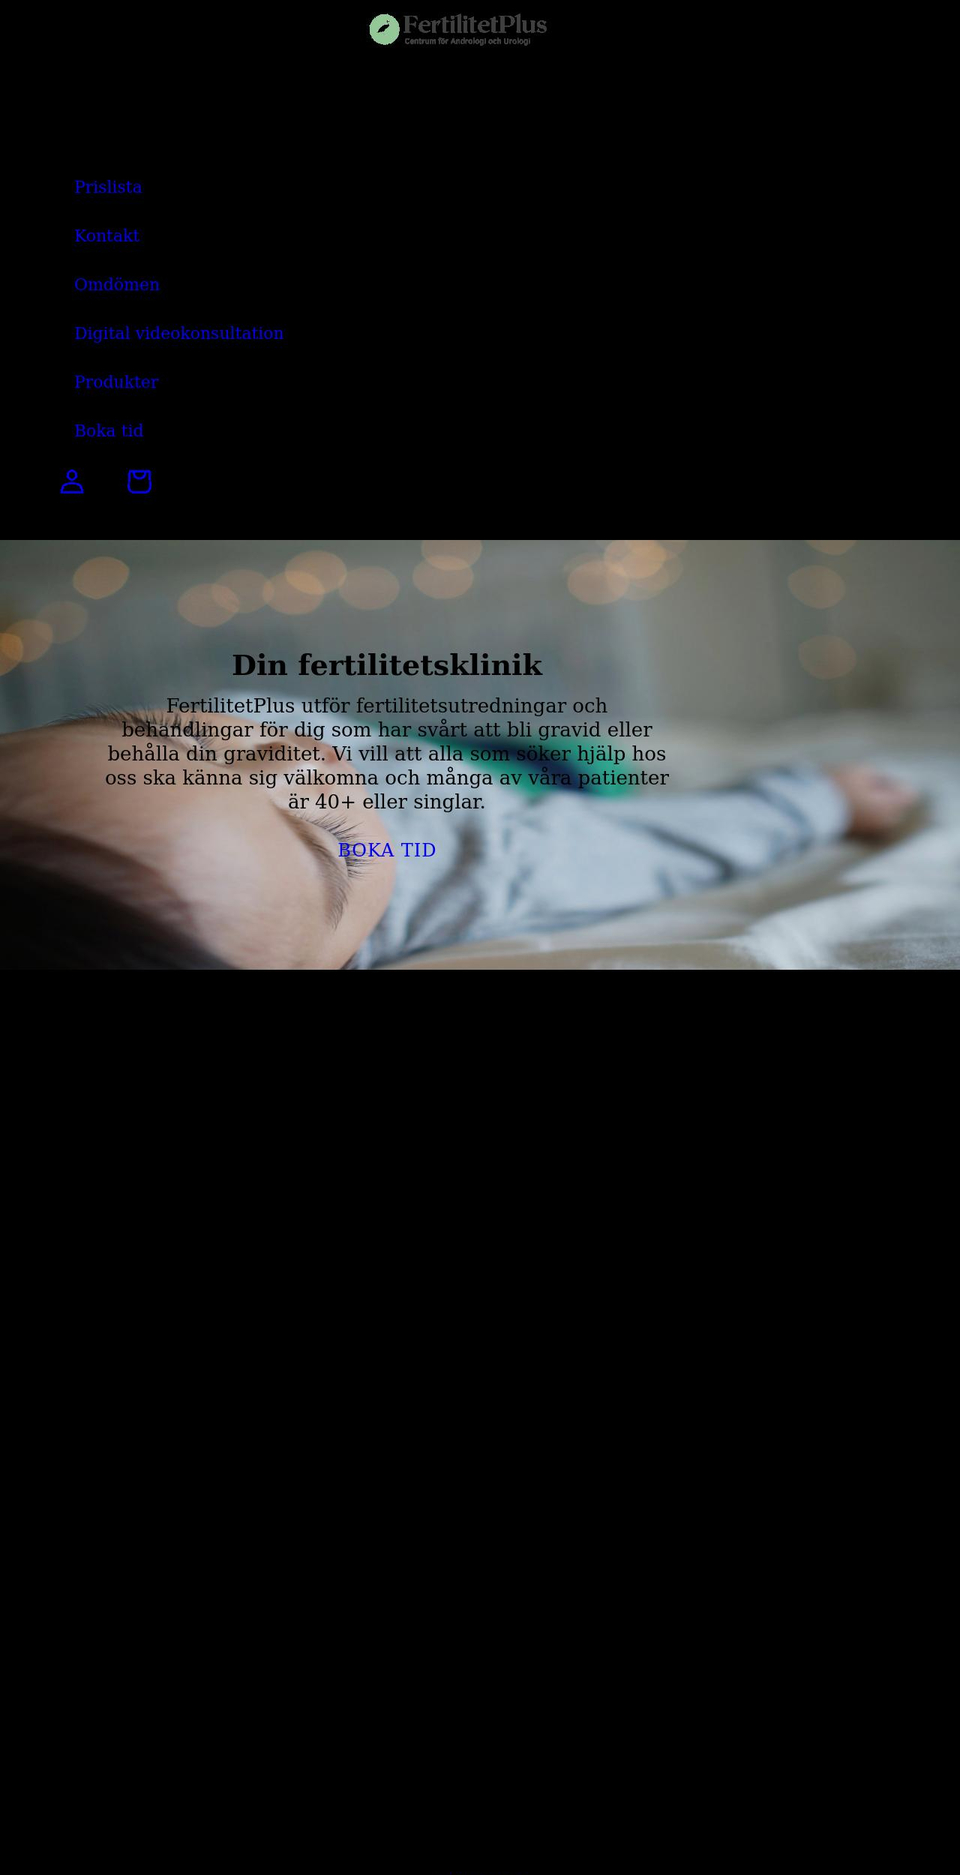 fertilitetplus.se shopify website screenshot